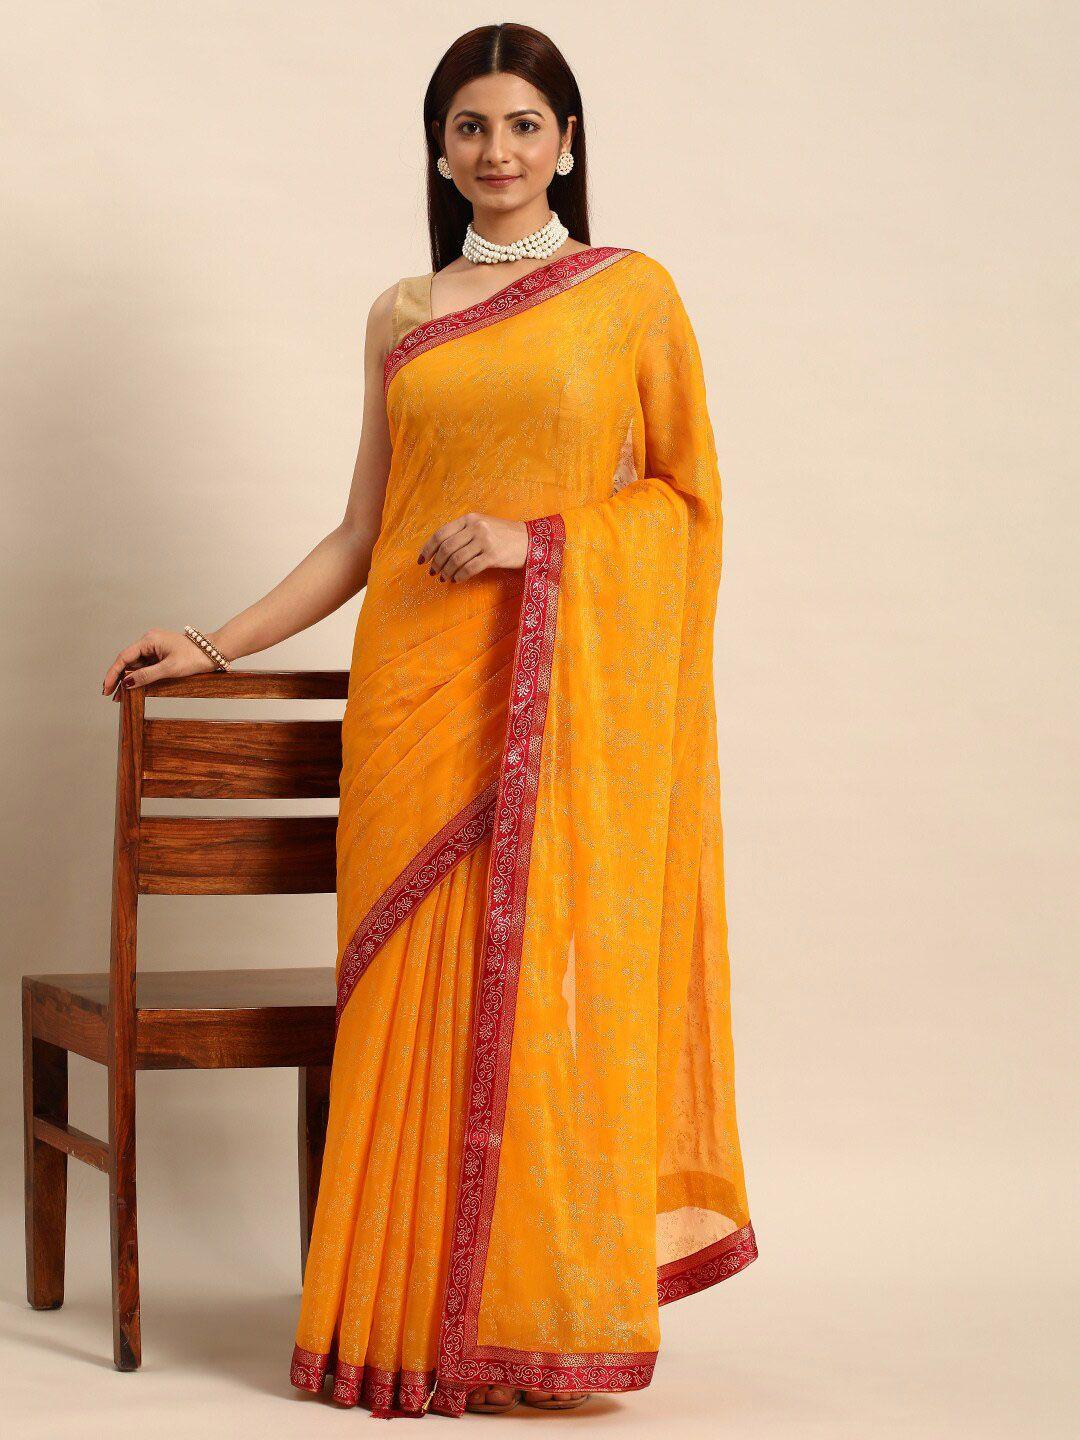 kalini-floral-embellished-saree